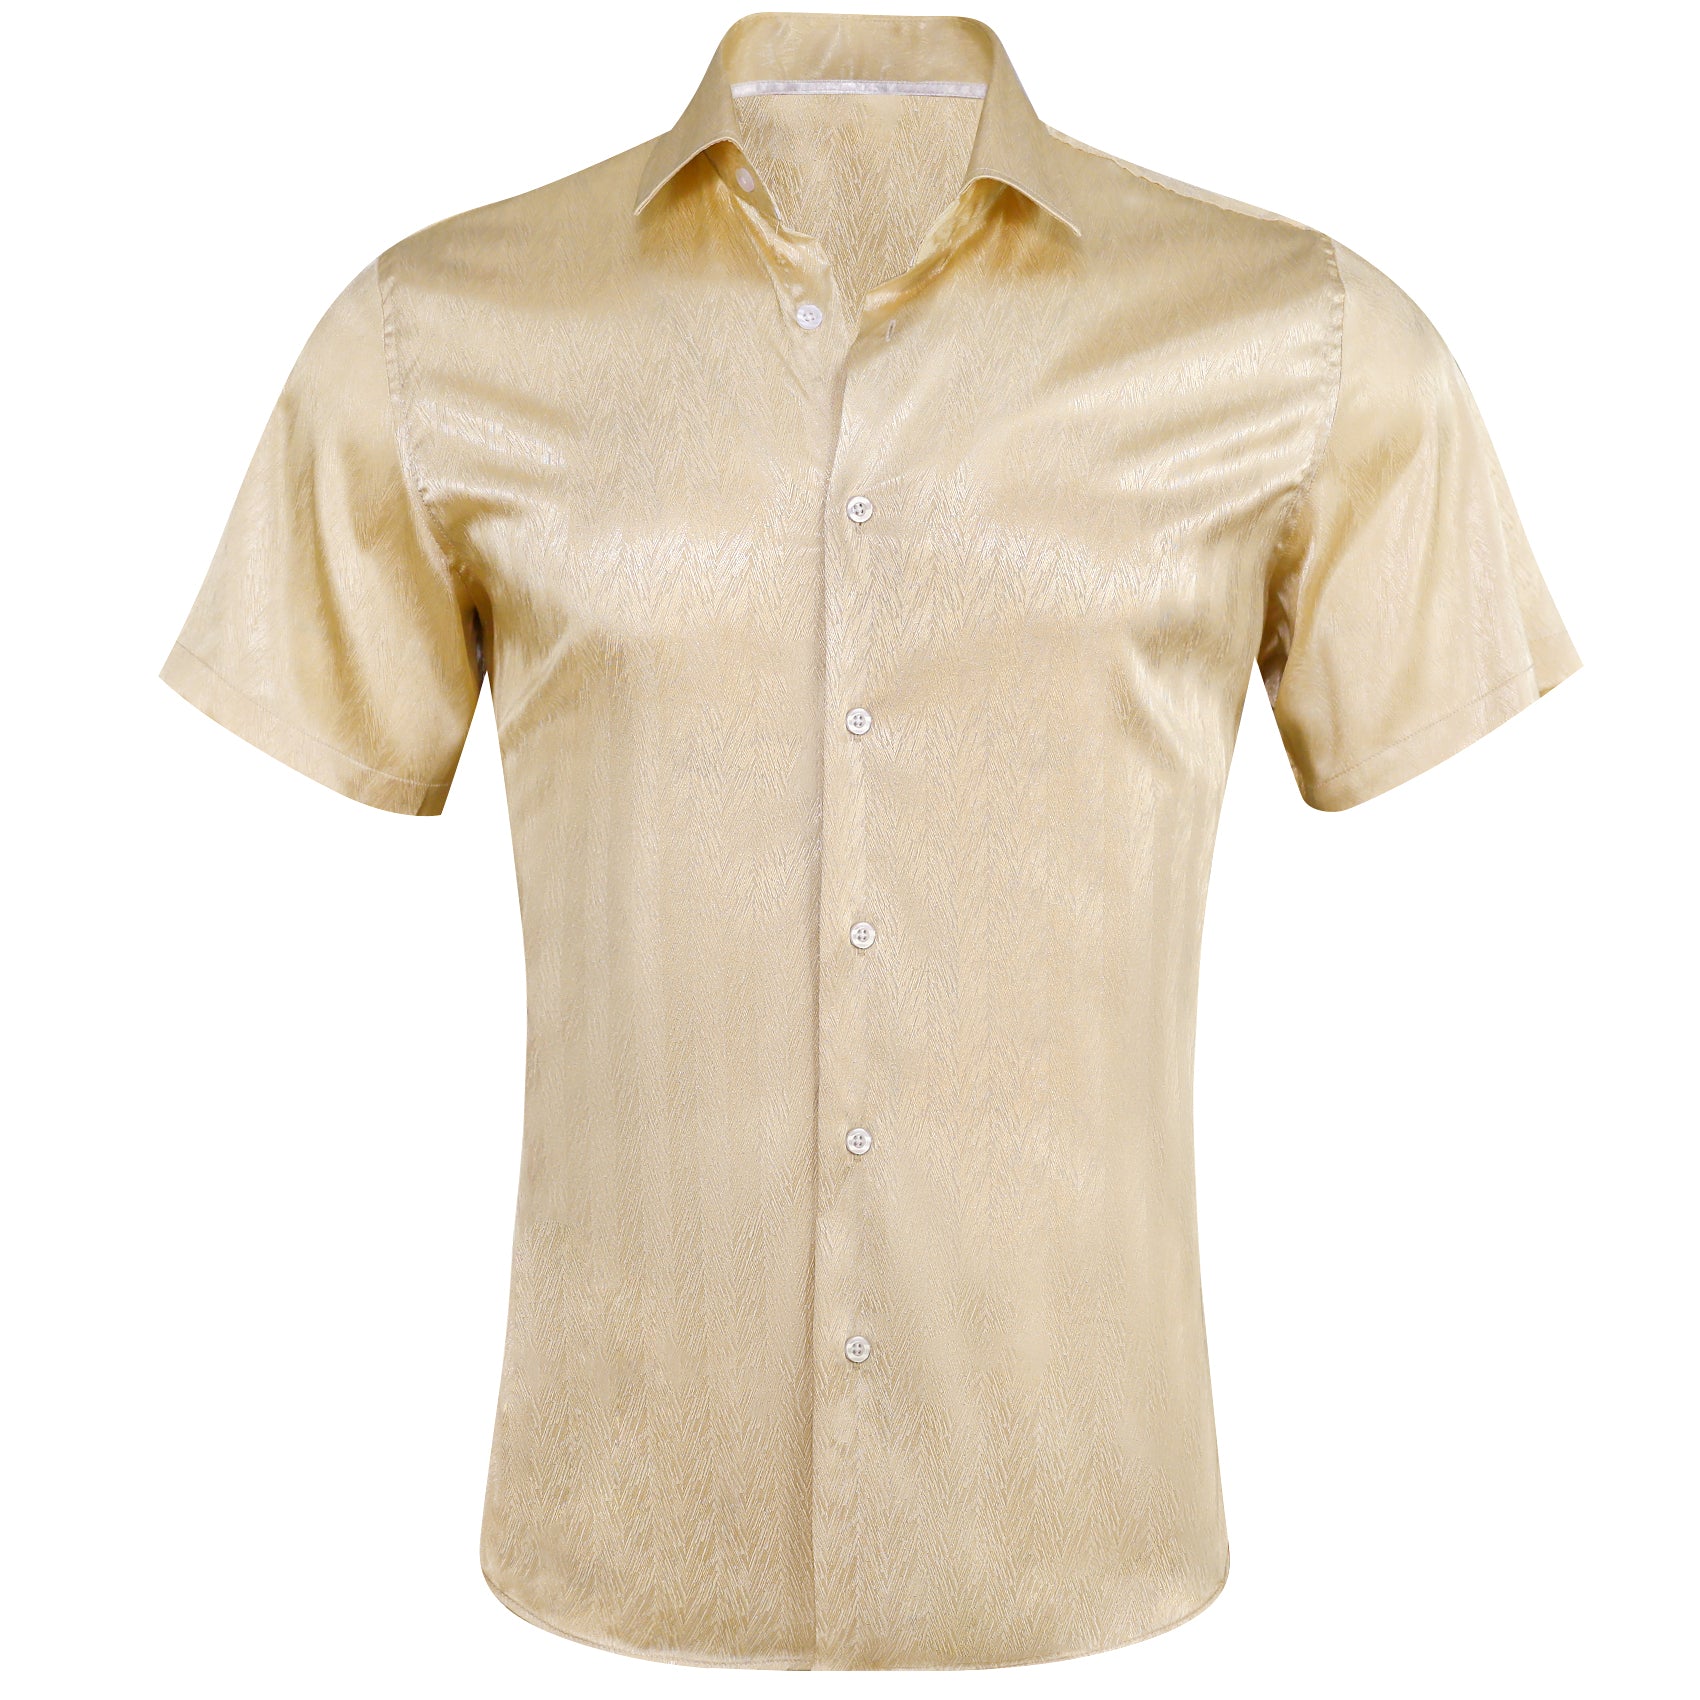 mens short sleeve button up gold shirts